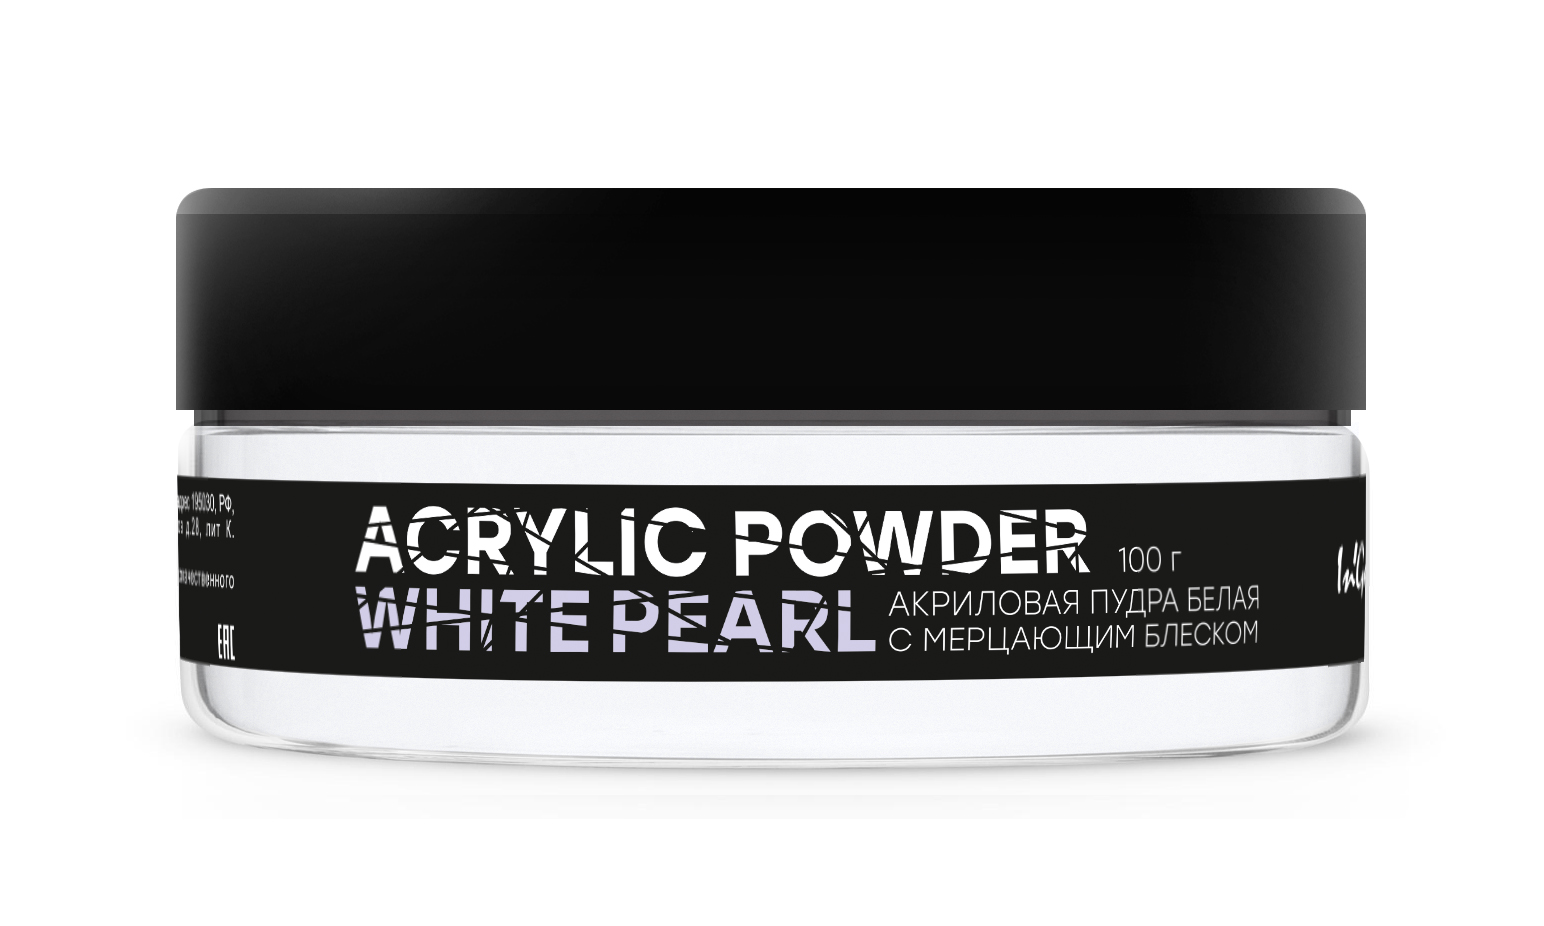 Акриловая пудра белая с мерцанием Acrylic Powder Classic White Pearl, 100 г акриловая пудра белая acrylic powder classic white 100 г